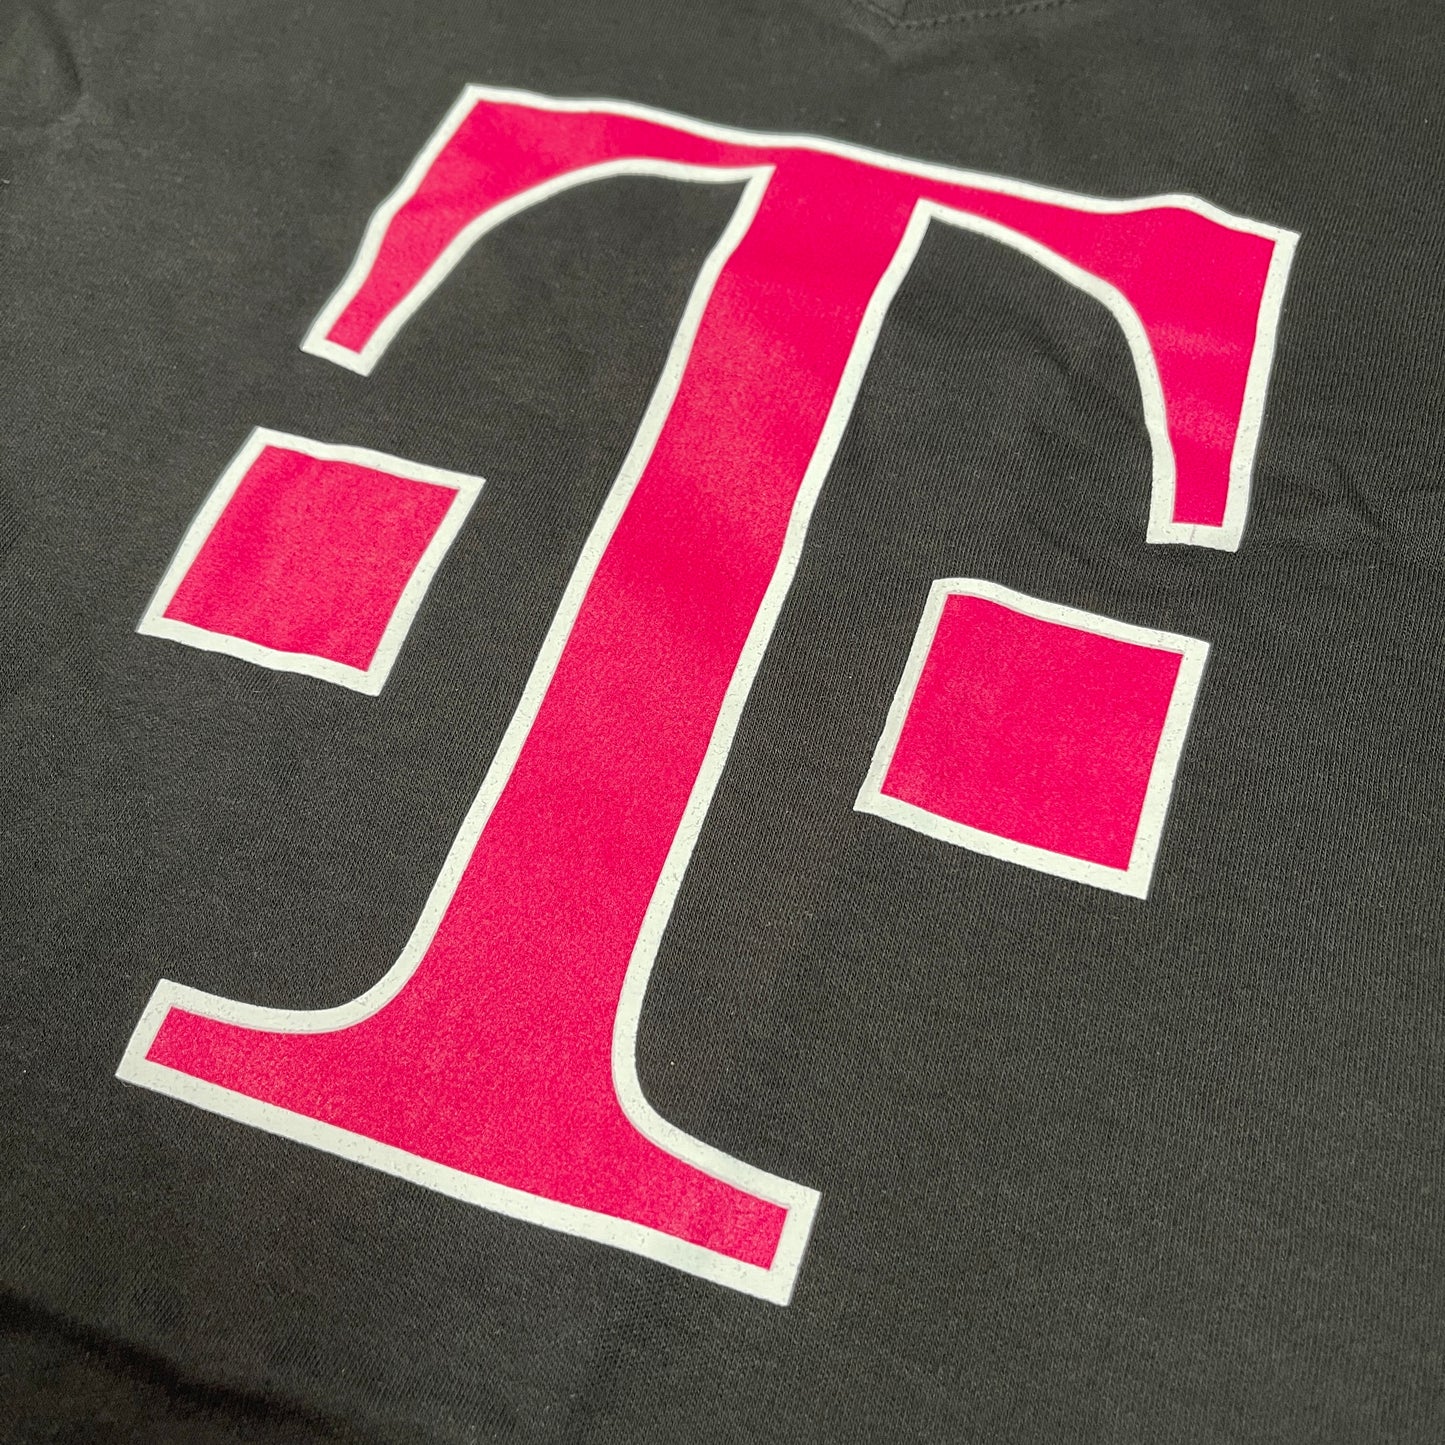 T-MOBILE Tee Shirt Short Sleeve Women's Sz XS Black/Pink Cotton Poly (New)